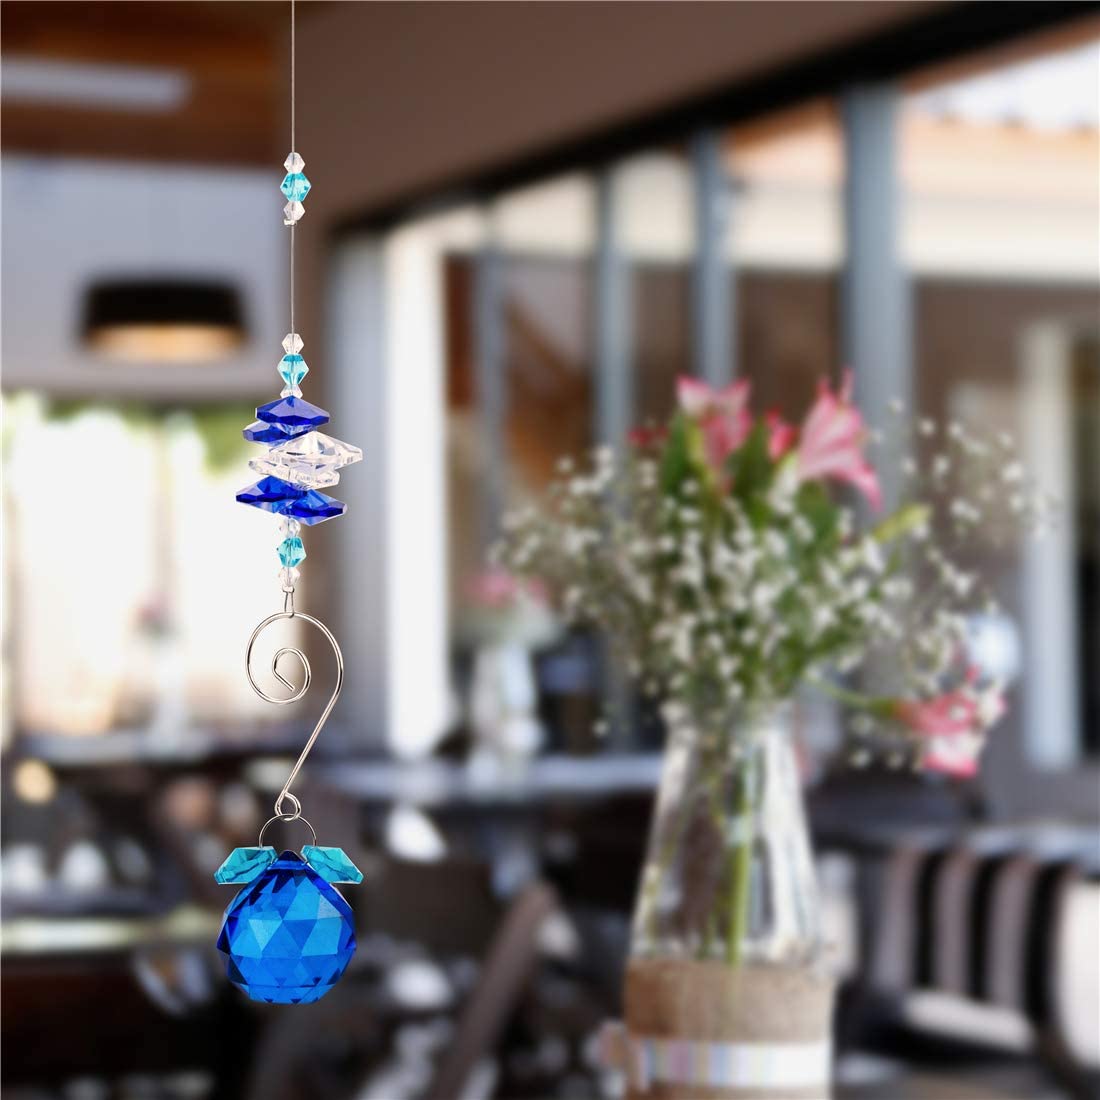 30mm Crystal Ball Chandelier Prism Ornaments Hanging Suncatcher